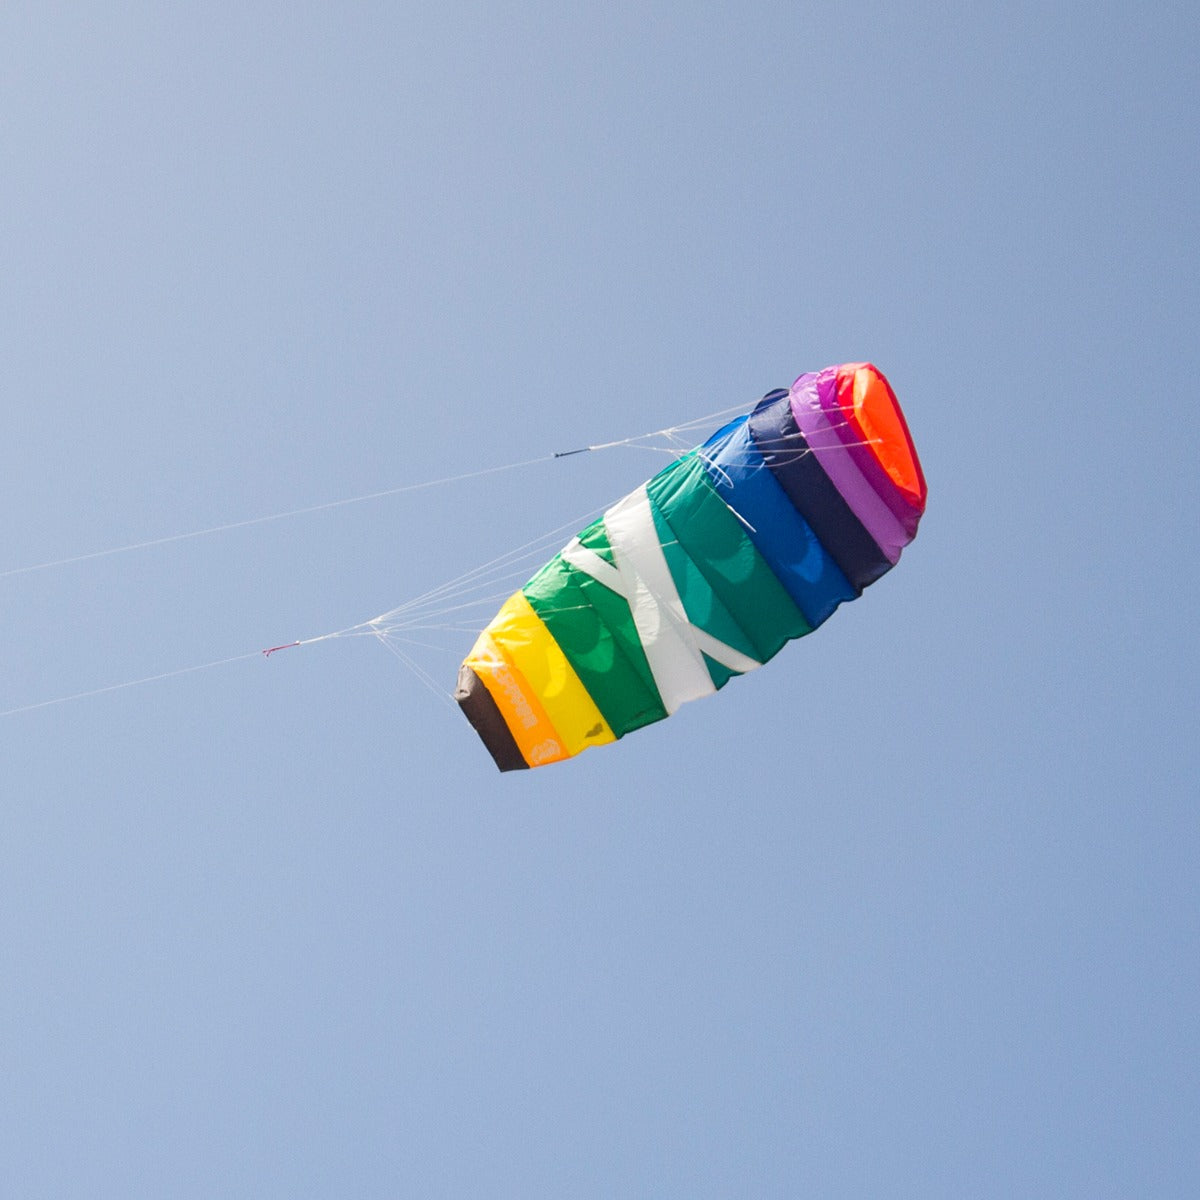 CrossKites Lenkmatte CrossKites Air 1.5 Rainbow Ready to Fly Lenkmatte 2 Leiner Kite Matte